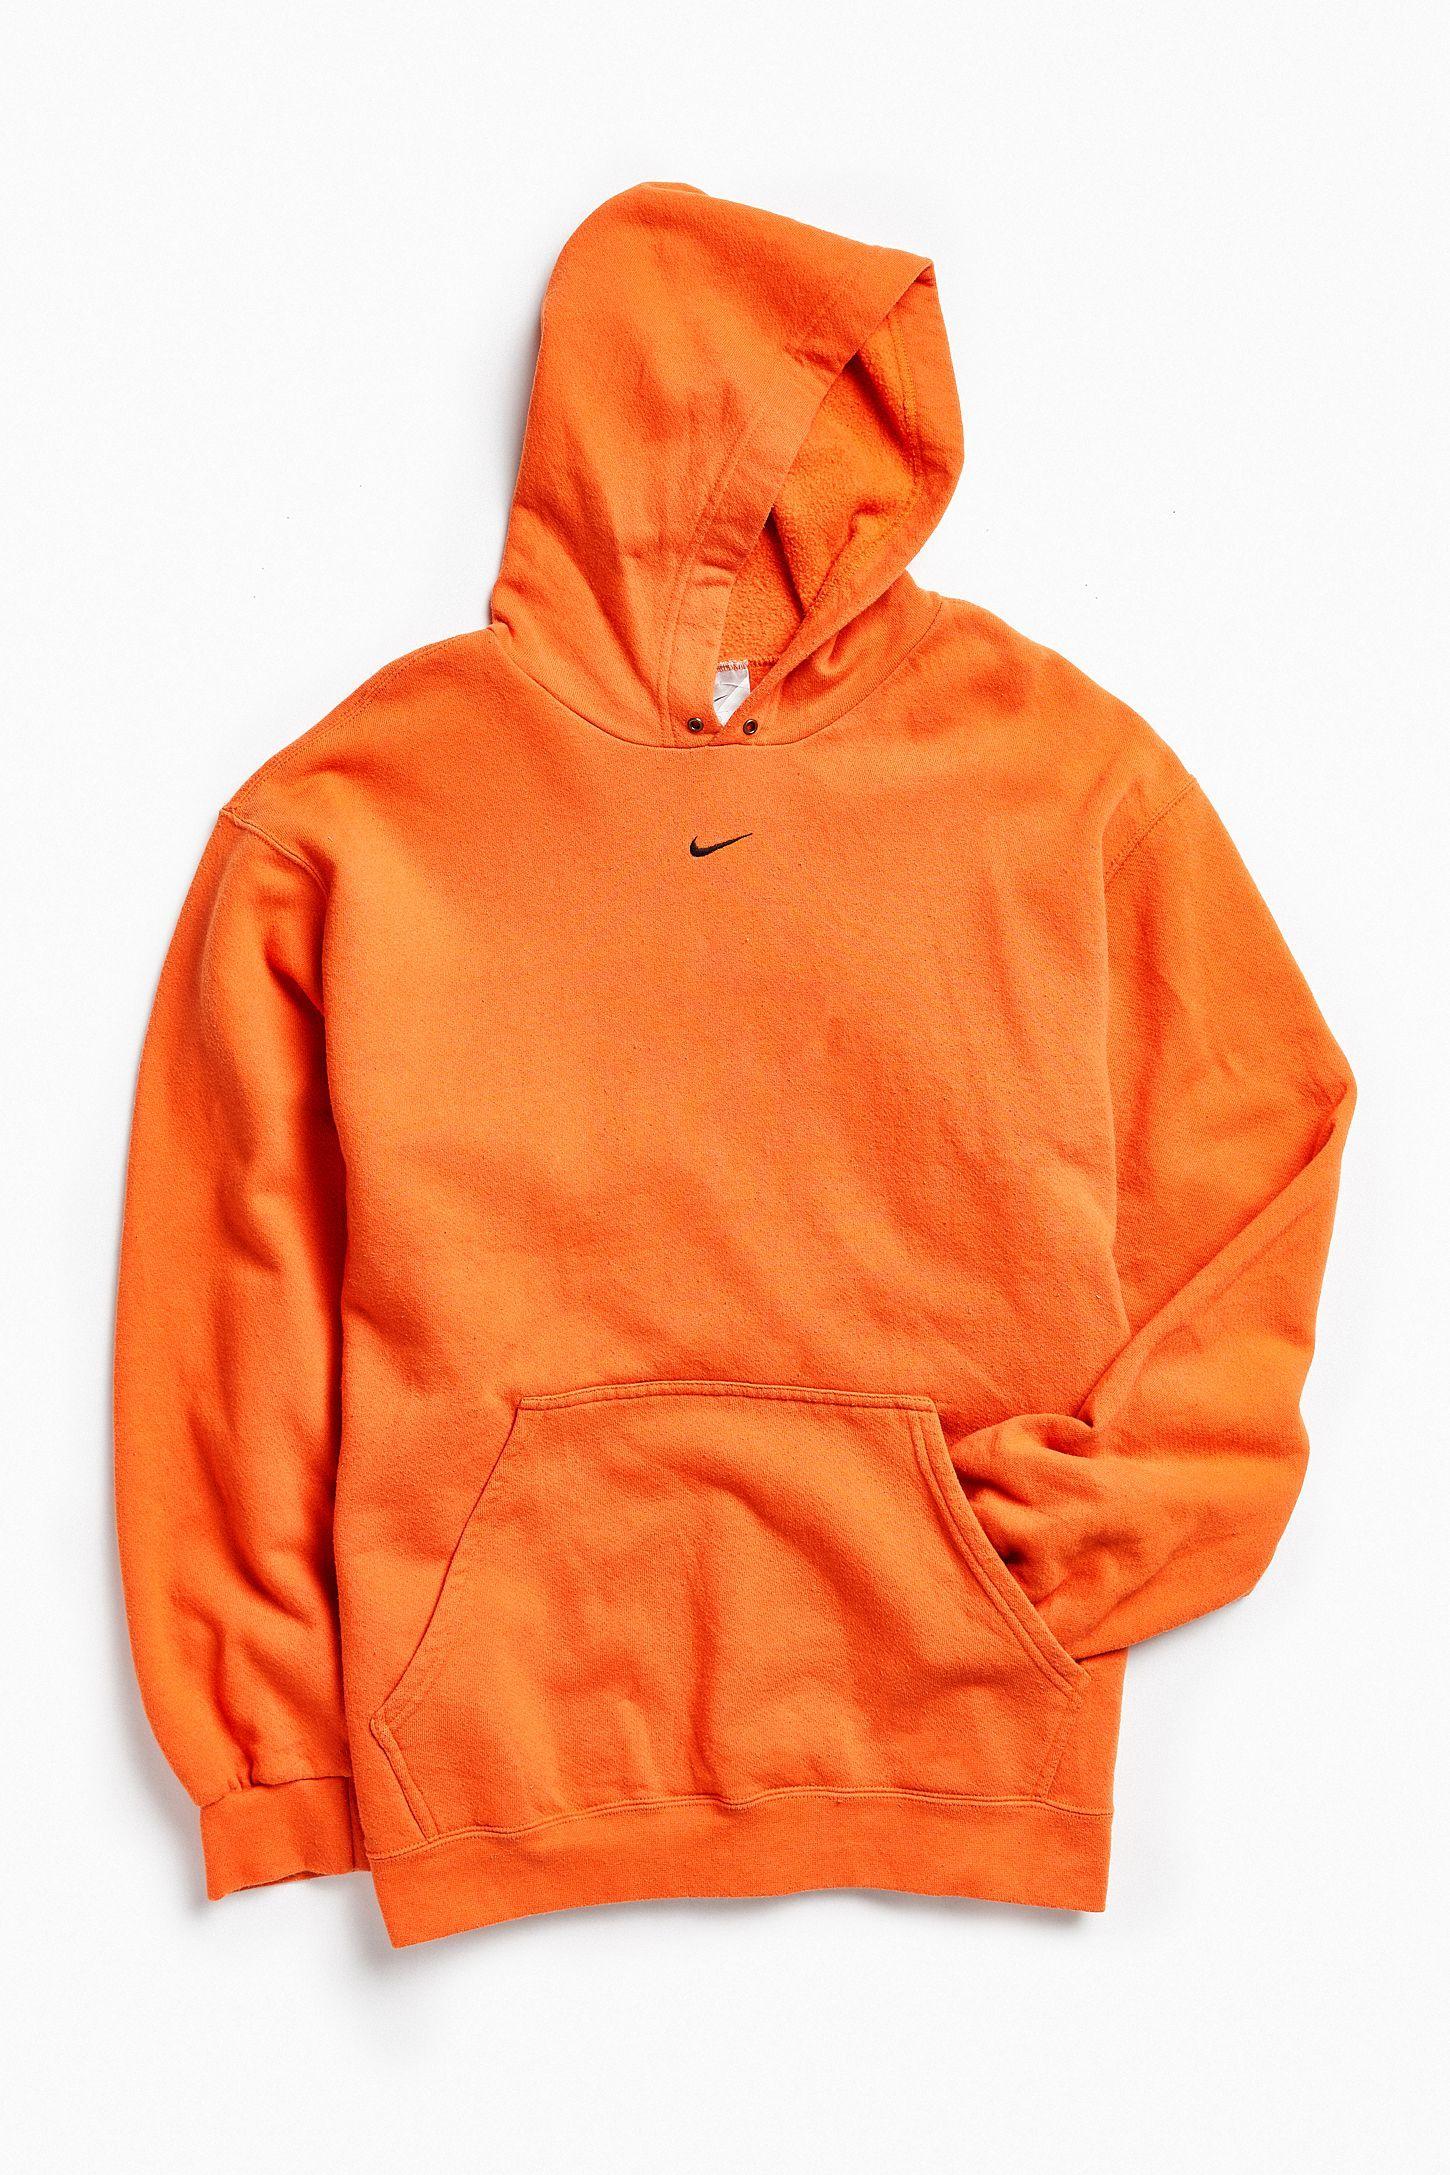 Nike Orange Logo - Vintage Nike Orange Logo Hoodie Sweatshirt | Urban Outfitters